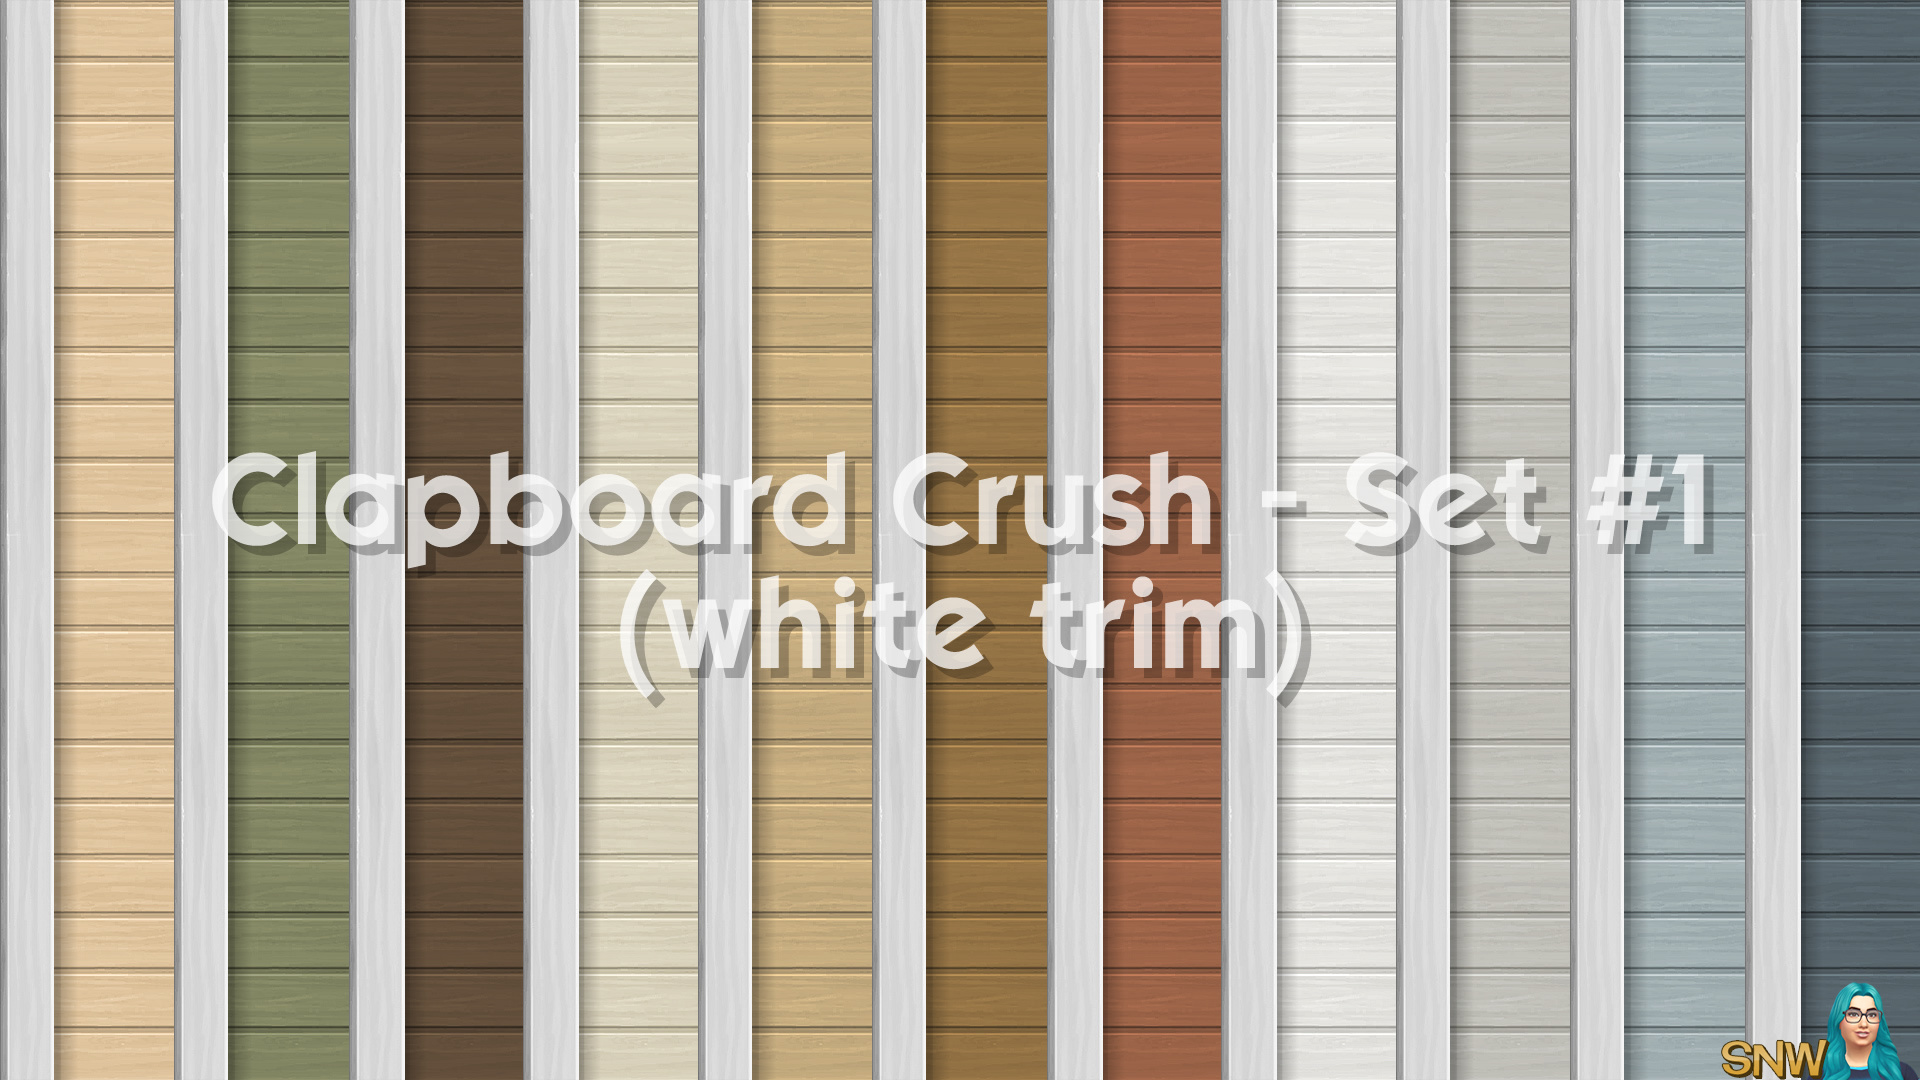 Clapboard Crush Siding Walls Set #1 (with White Corner Trim)